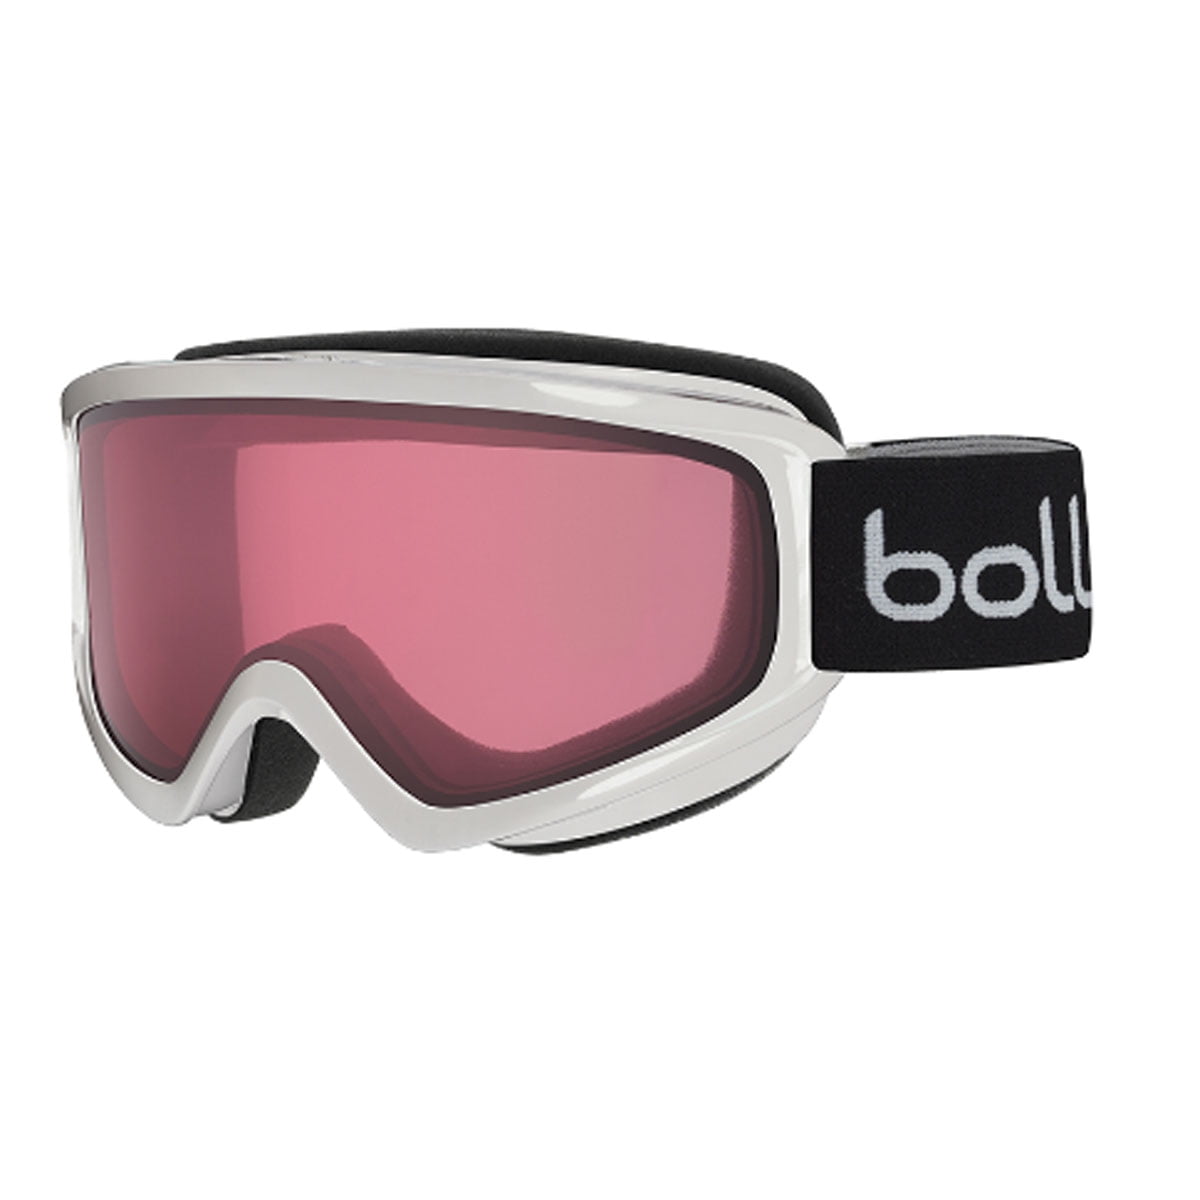 Bolle Freeze Ski Goggles 21488 Shiny White Vermillon Gun Lens for sale online 